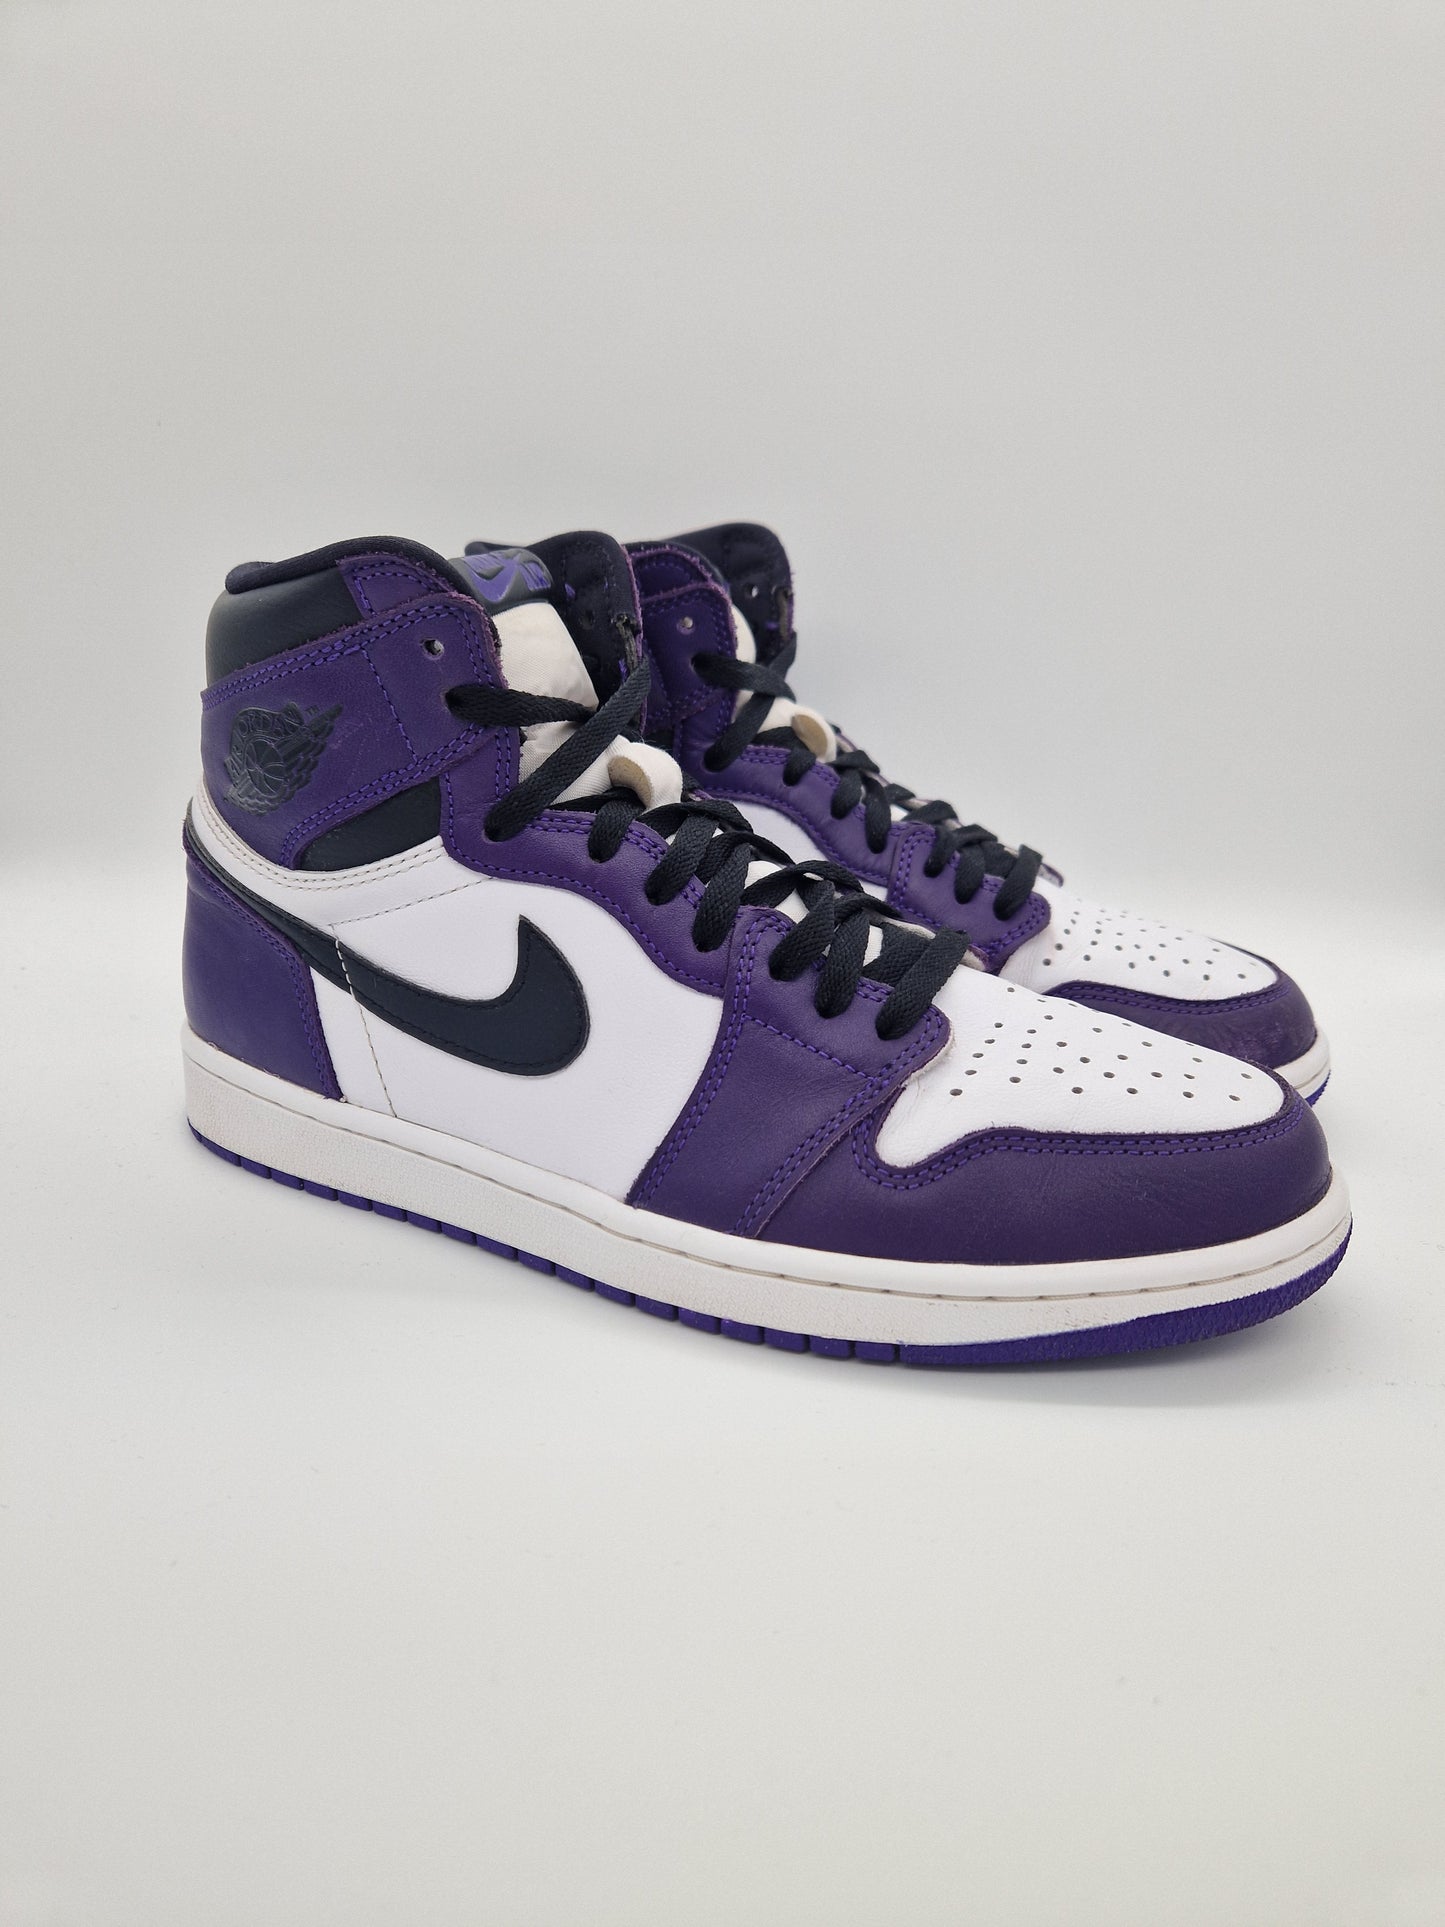 Jordan 1 Retro High 'Court Purple' (UK9)